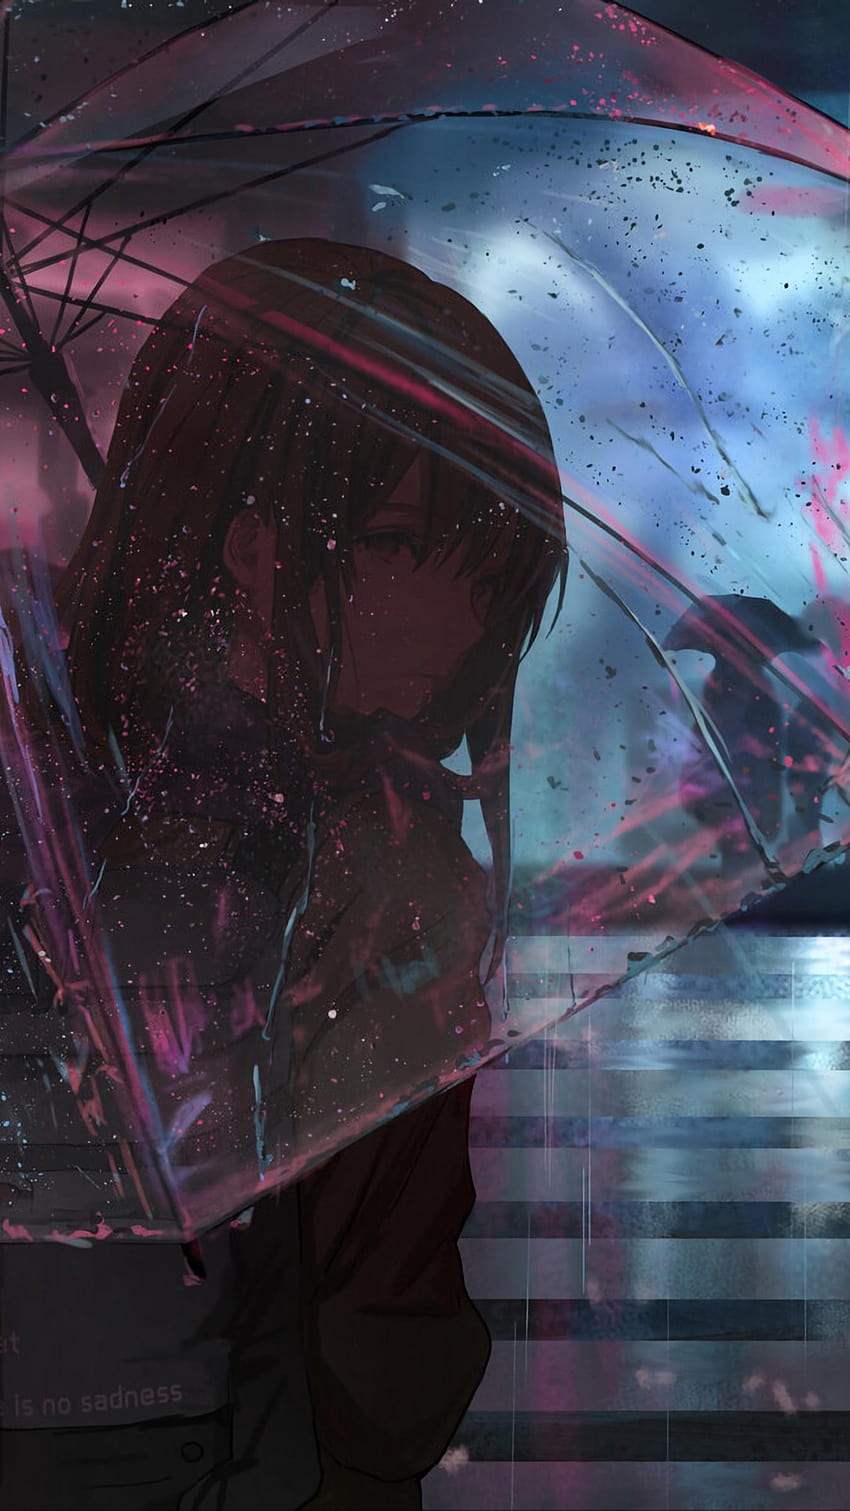 Anime garota triste na ilustração da chuva